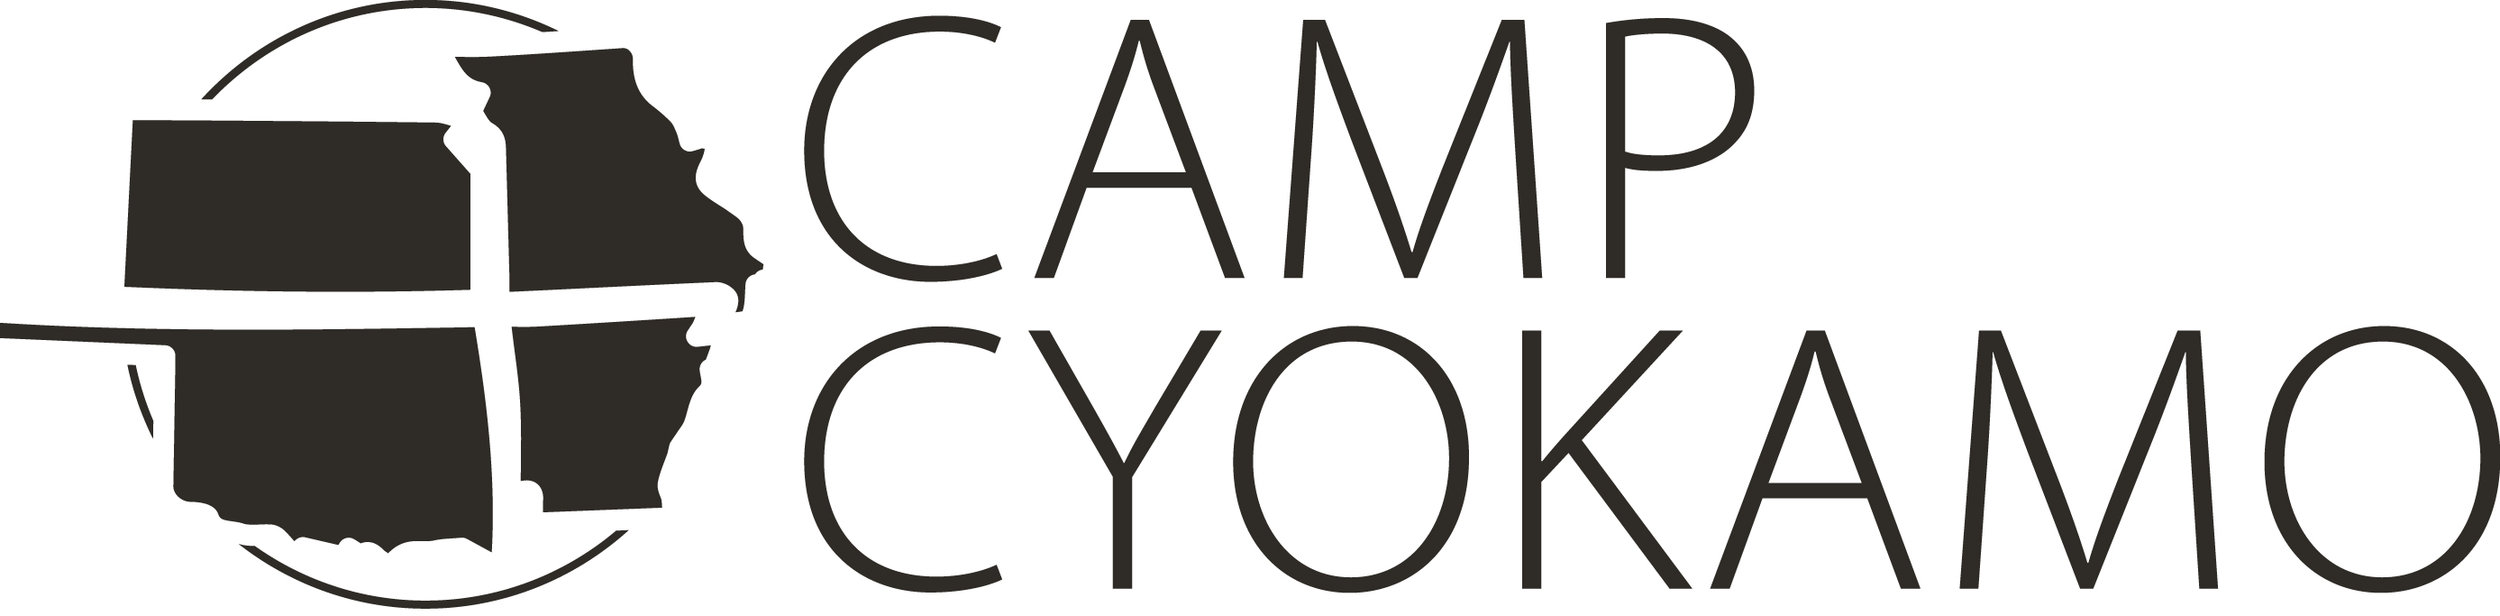 Camp Cyokamo Stacked (black).jpg